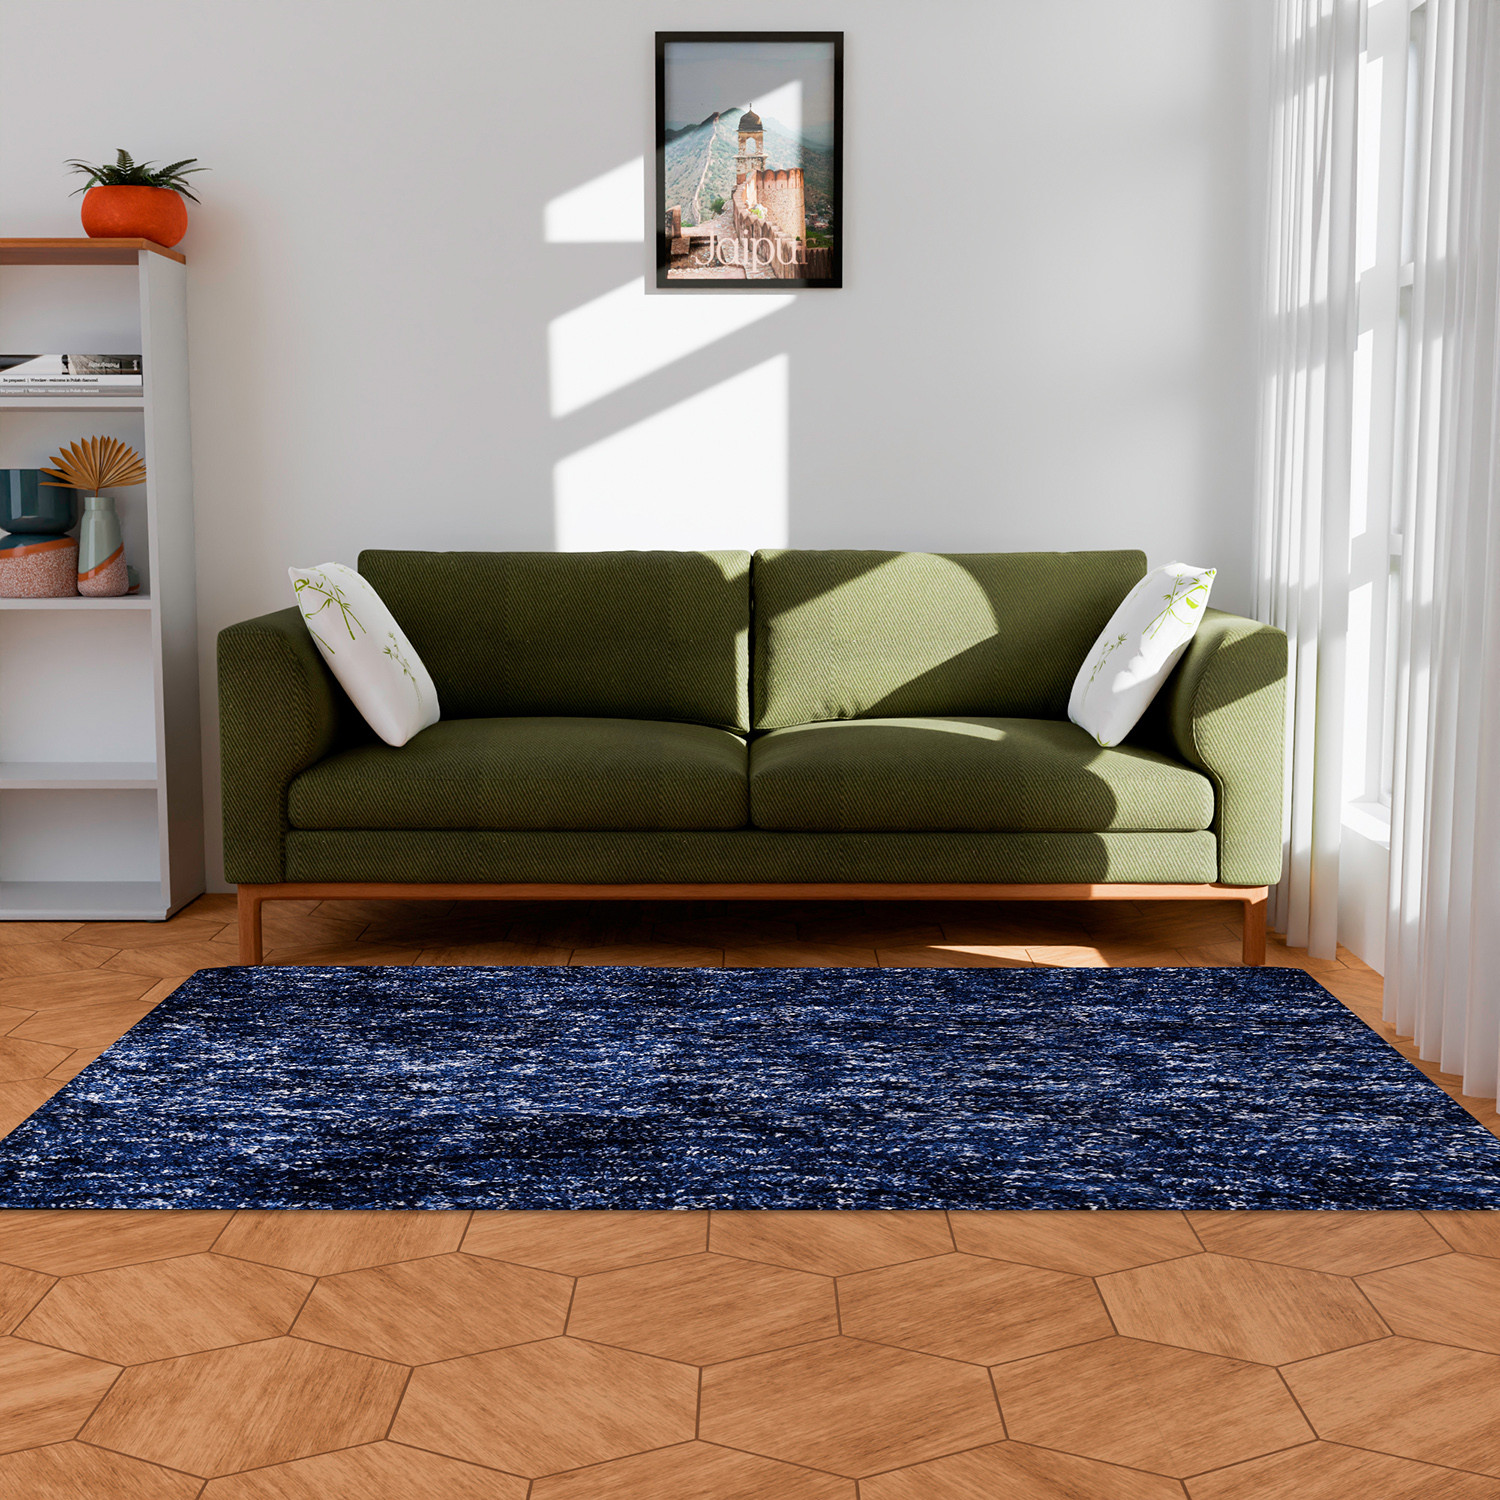 Kuber Industries Carpet | Shaggy Carpet for Living Room | Fluffy Door Mat | Lexus Home Decor Carpet & Door Mat Combo | Floor Carpet Rug & Door Mat Set | Set of 2 | Blue